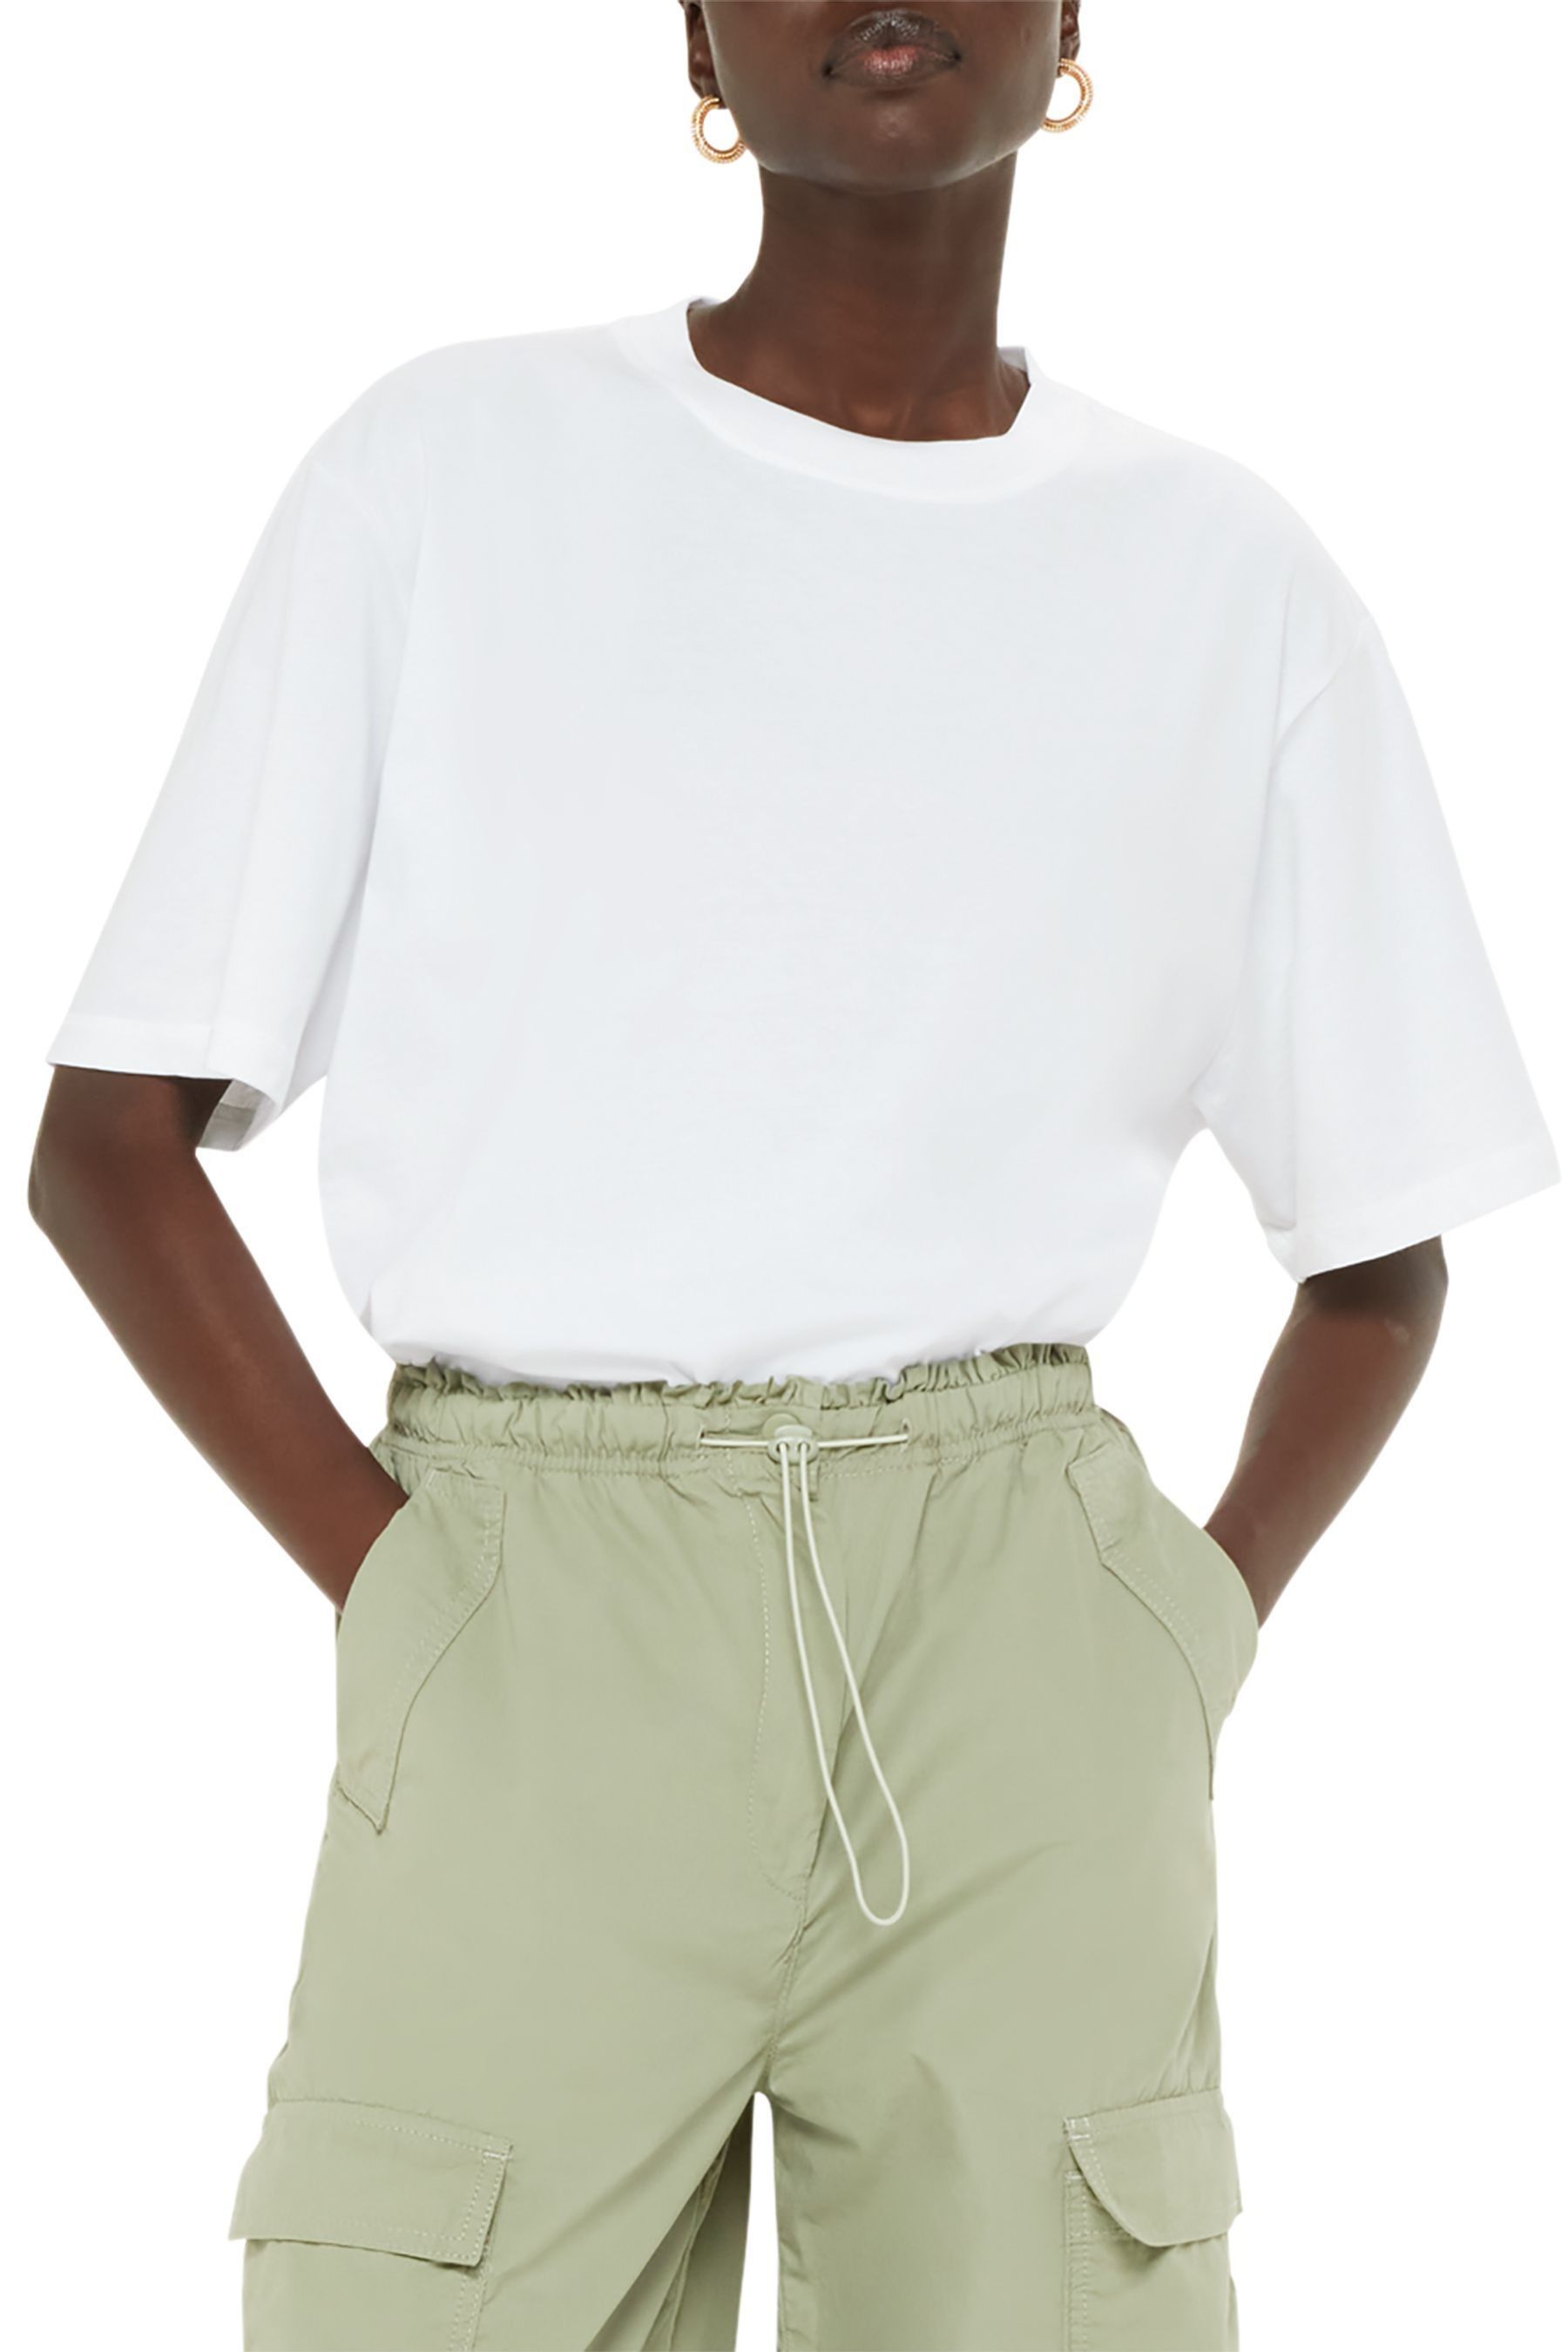 Белая футболка-бойфренд в стиле оверсайз Whistles, белый женская толстовка в стиле бойфренд 6 цветов